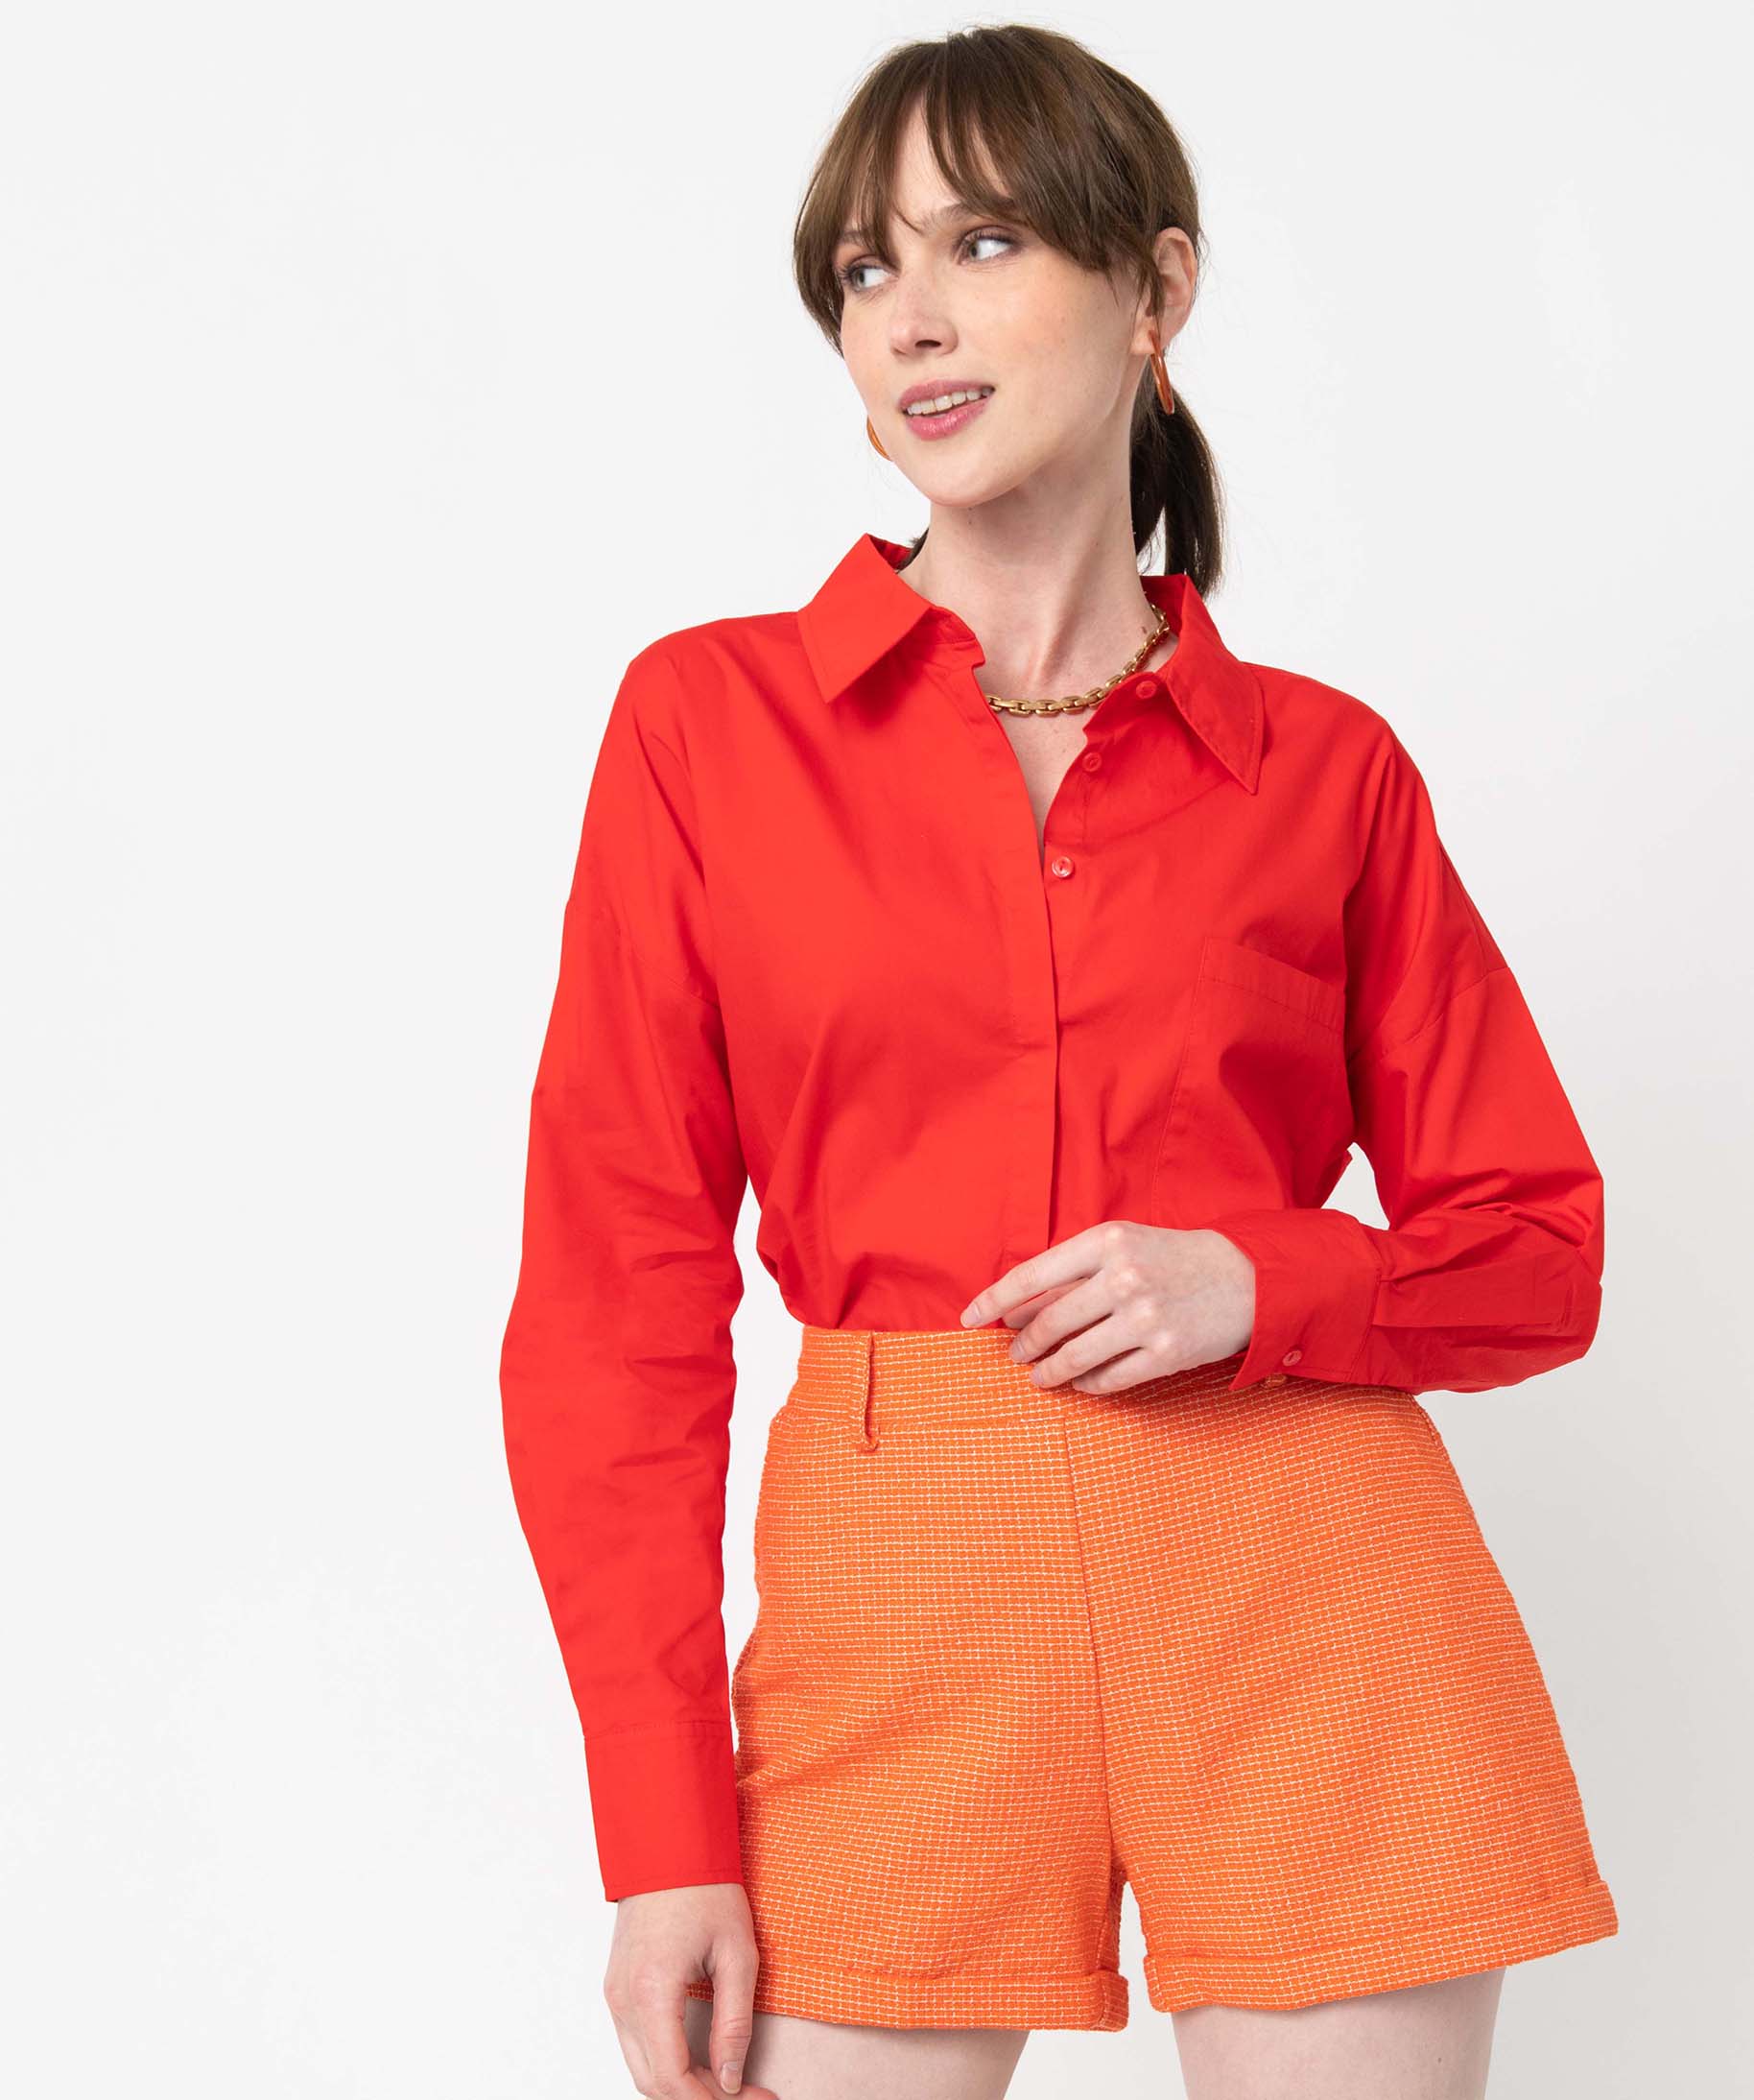 chemise femme coupe oversize avec poche poitrine rouge chemisiers